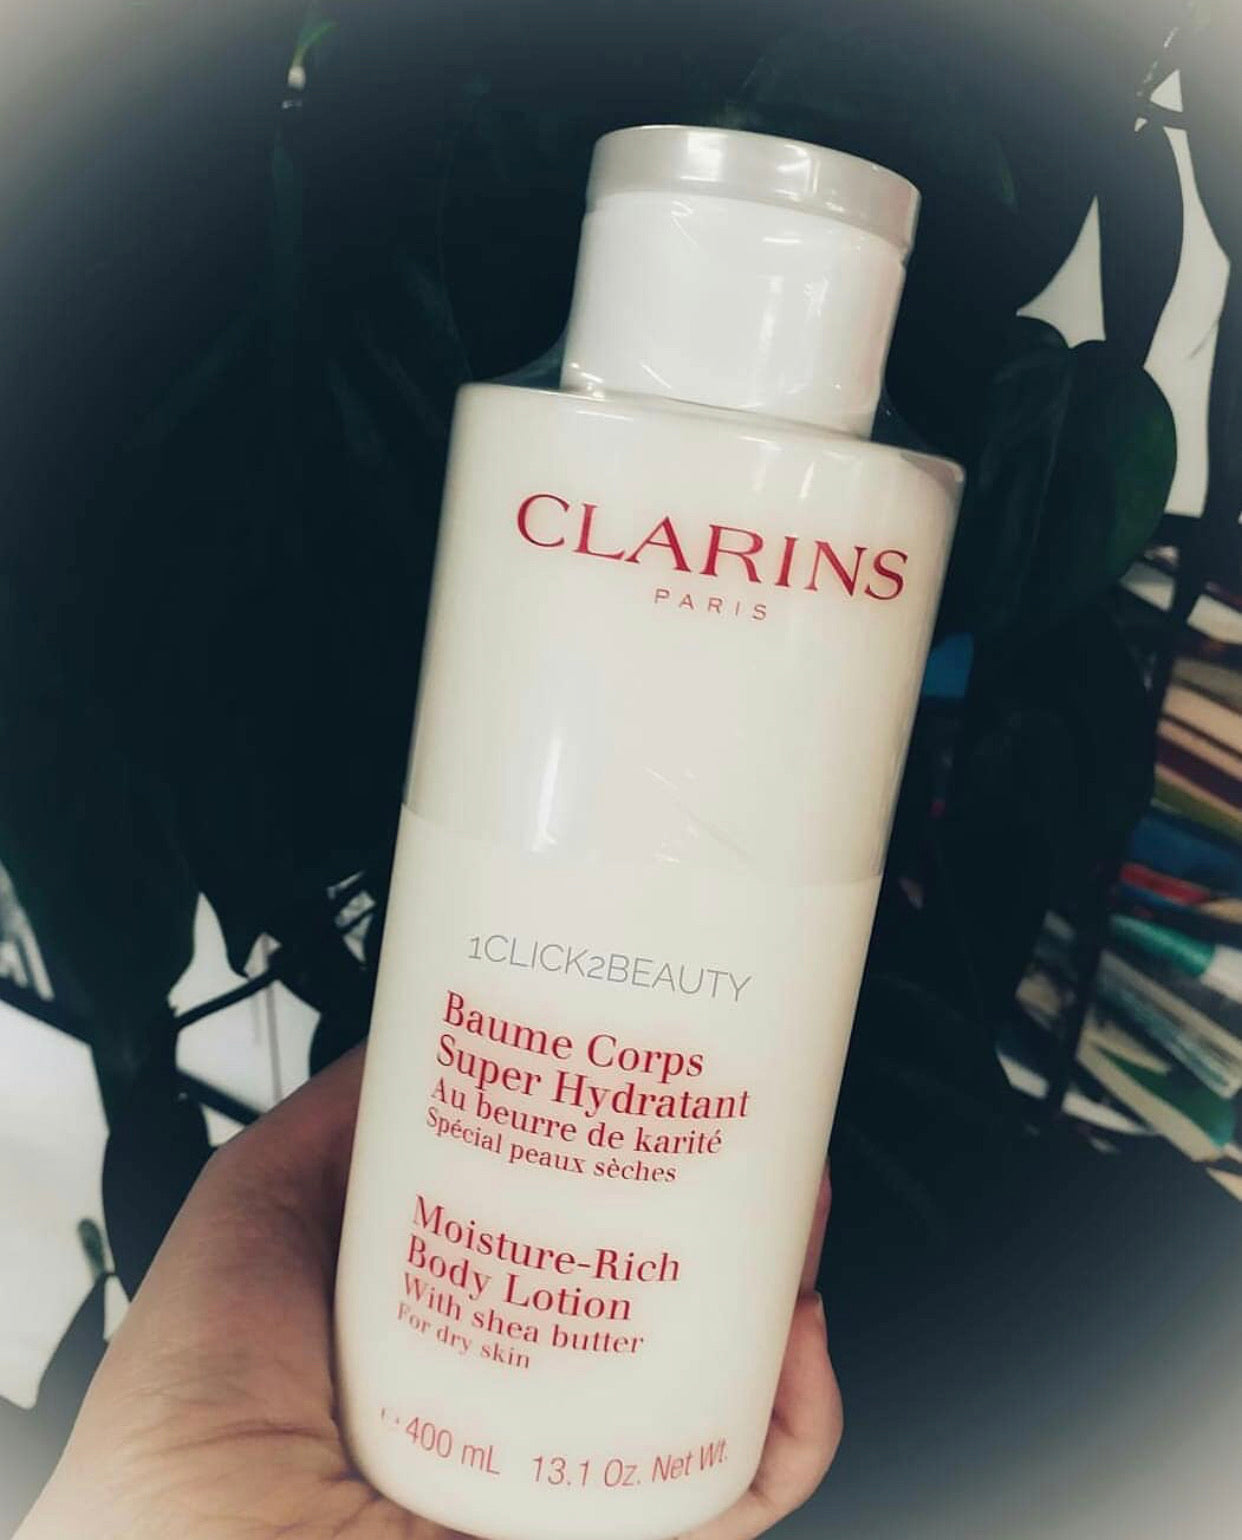 Clarins moisture rich body lotion 柔潤身體乳 400ml - buy European skincare in Hong Kong - 1click2beauty